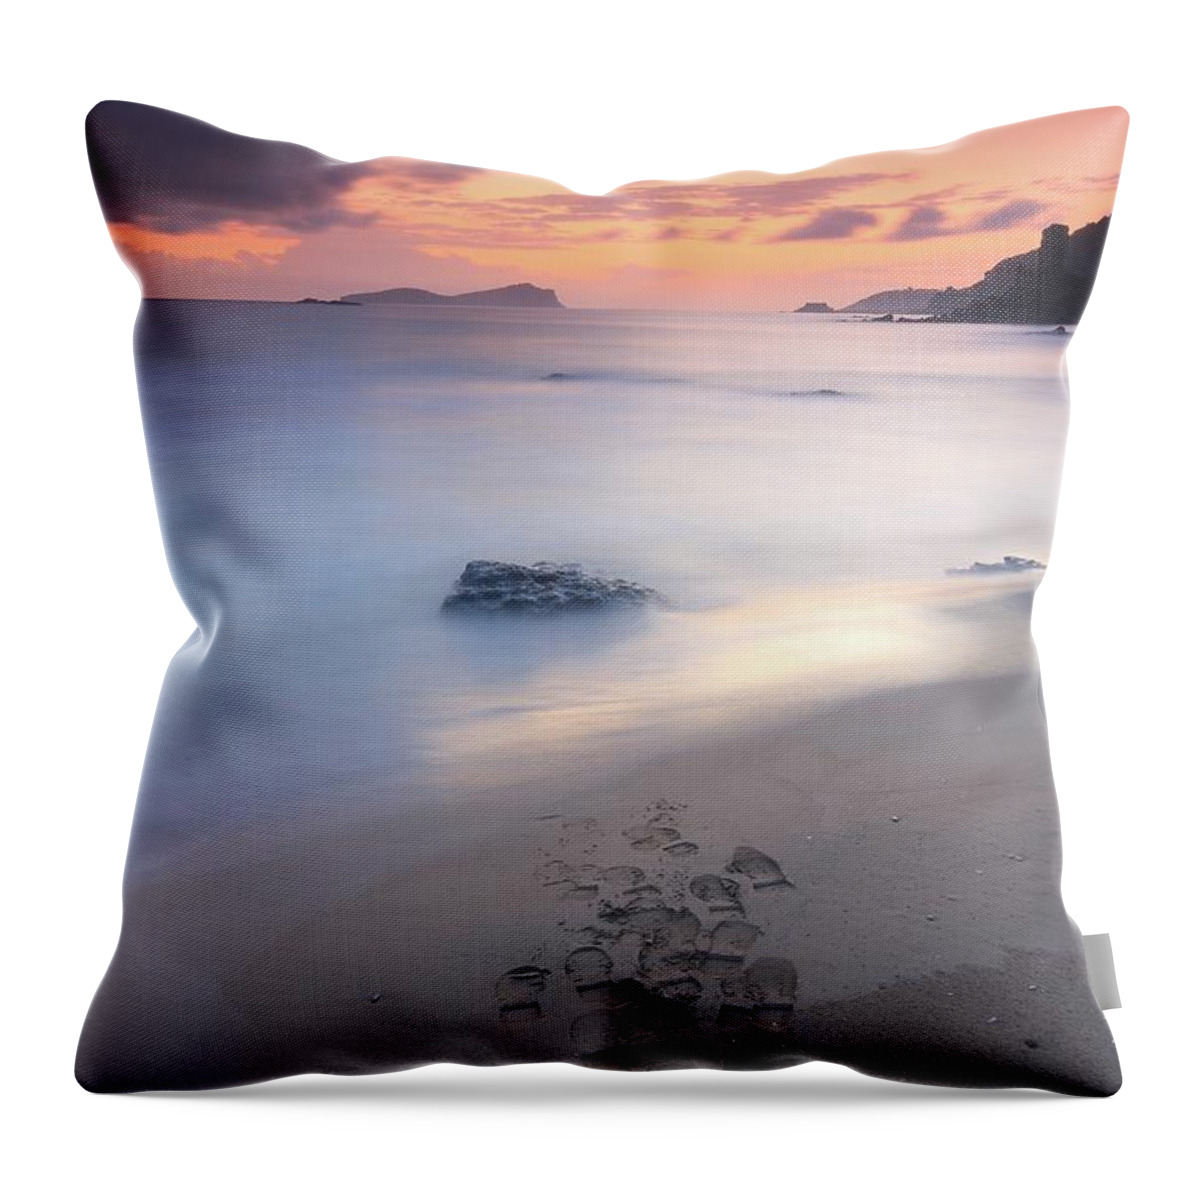 Outdoors Throw Pillow featuring the photograph Footprints On Beach At Sunset by Oscar Gonzalez